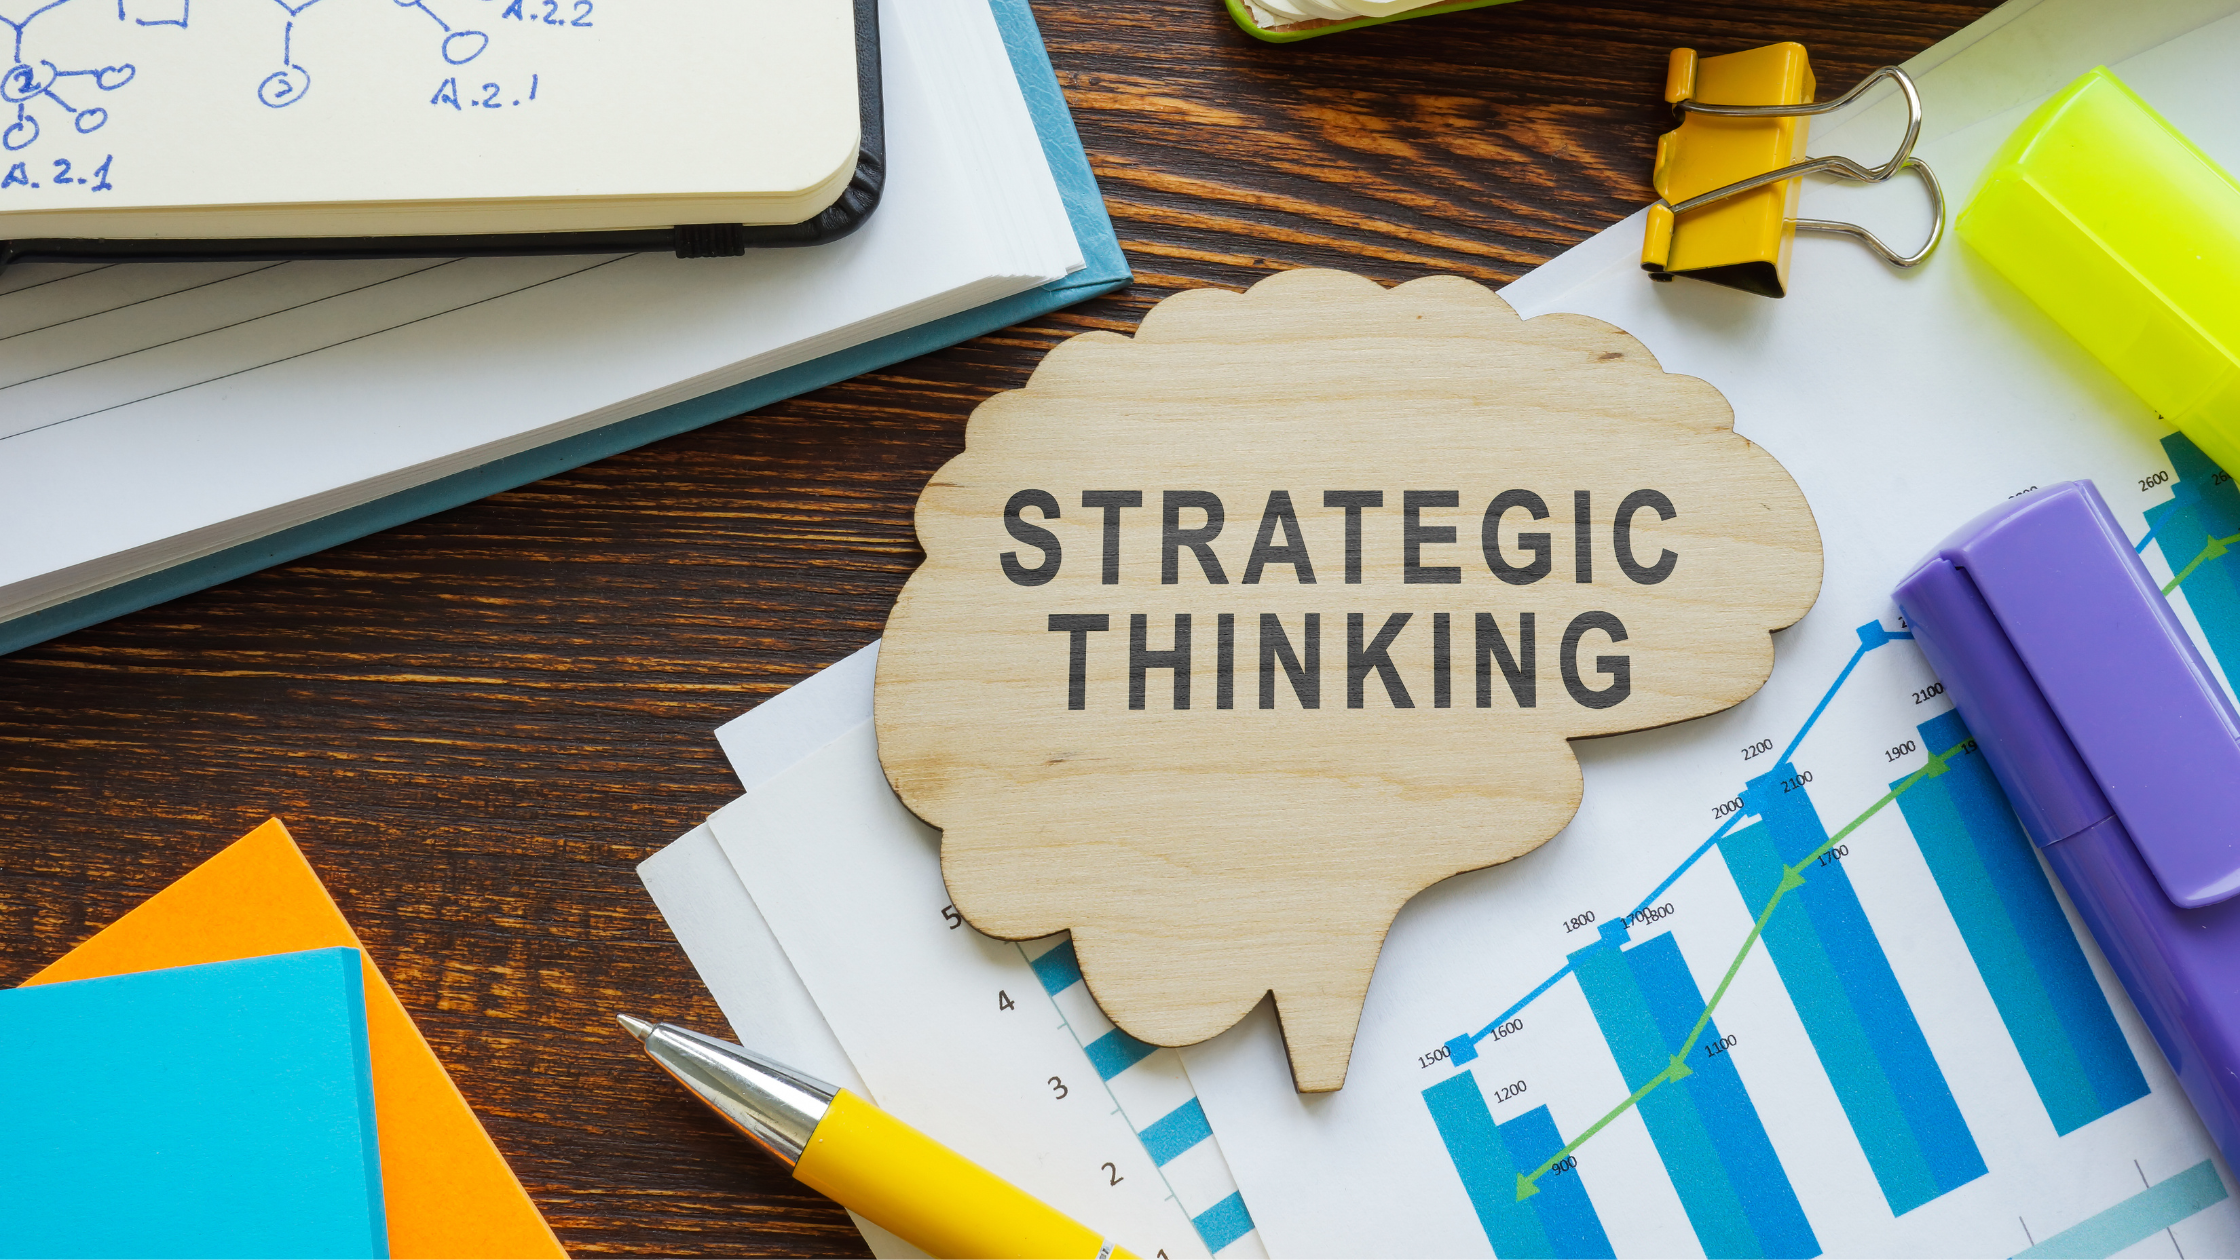 A post written strategic Thinking